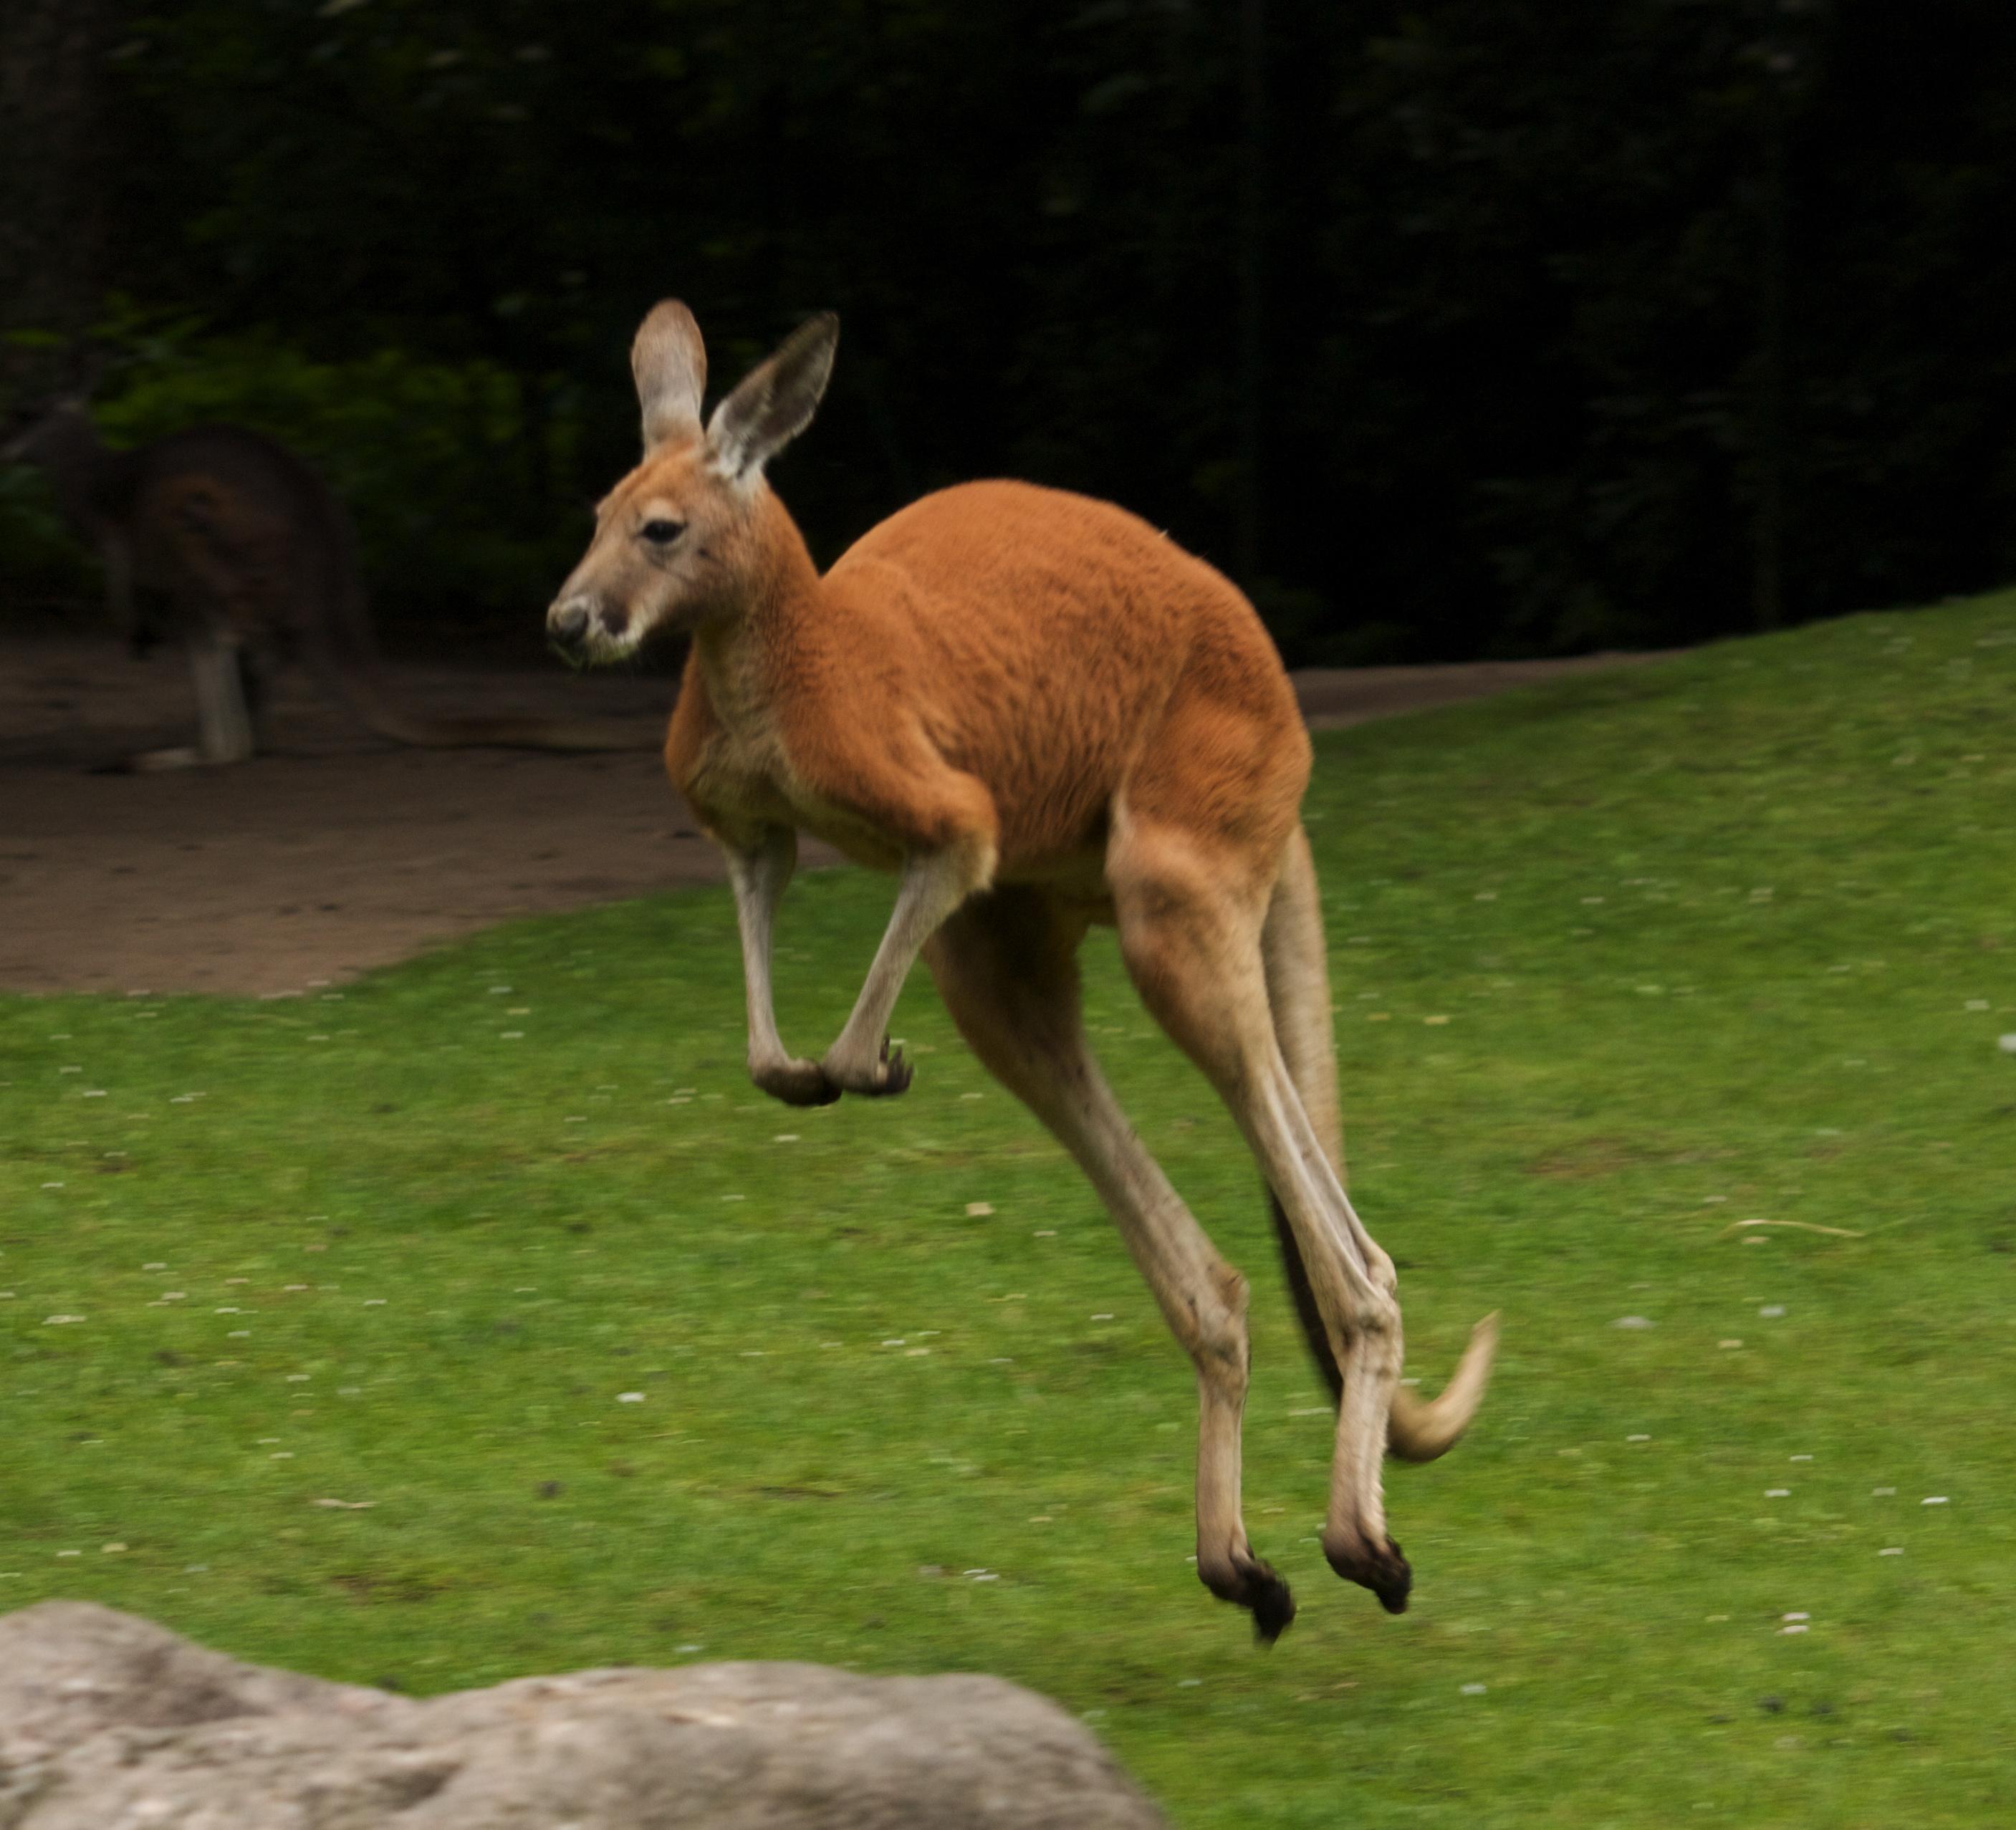 Kangaroo Picture, High Quality Kangaroo Background and Wallpaper